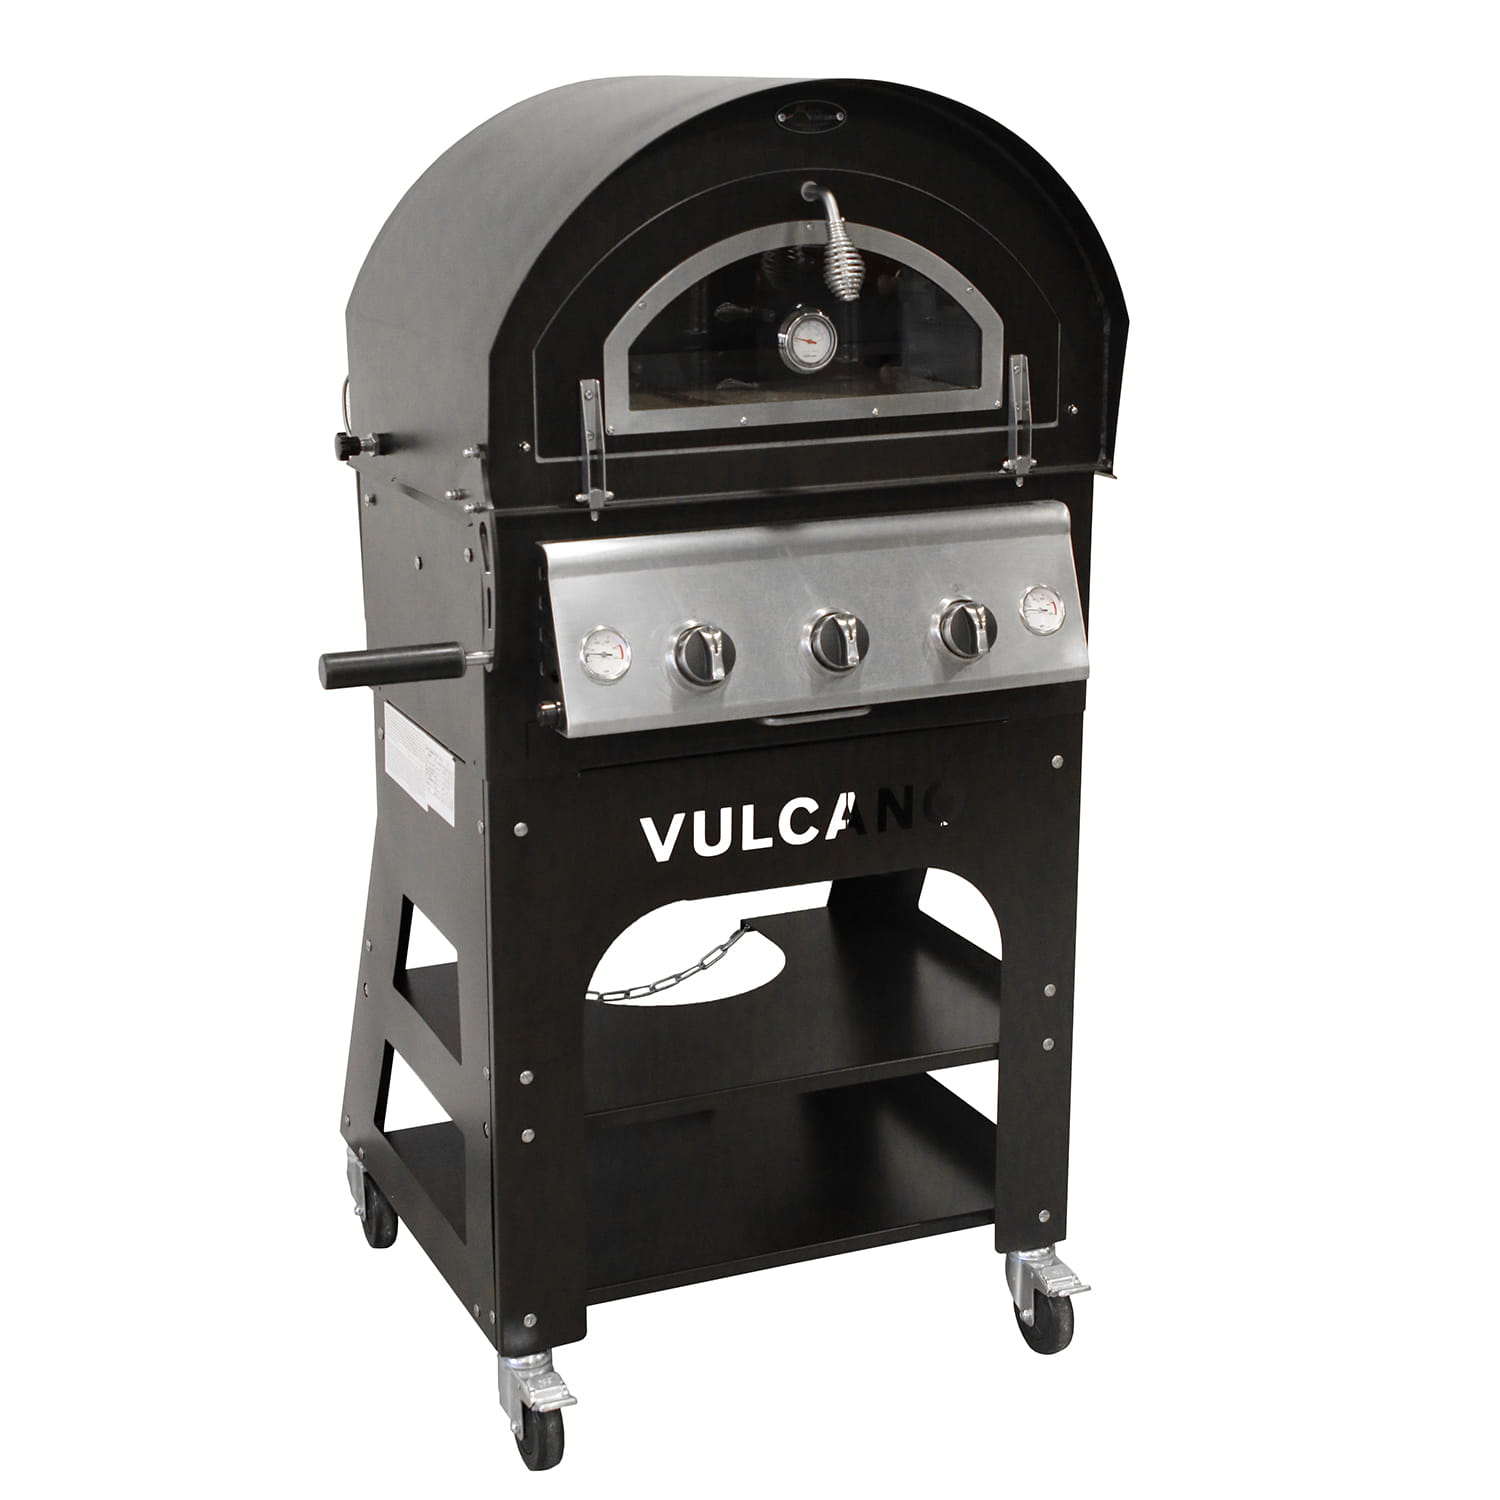 Vulcano 3 Premium Gas - Multifunctional gas oven / Gas pizza oven